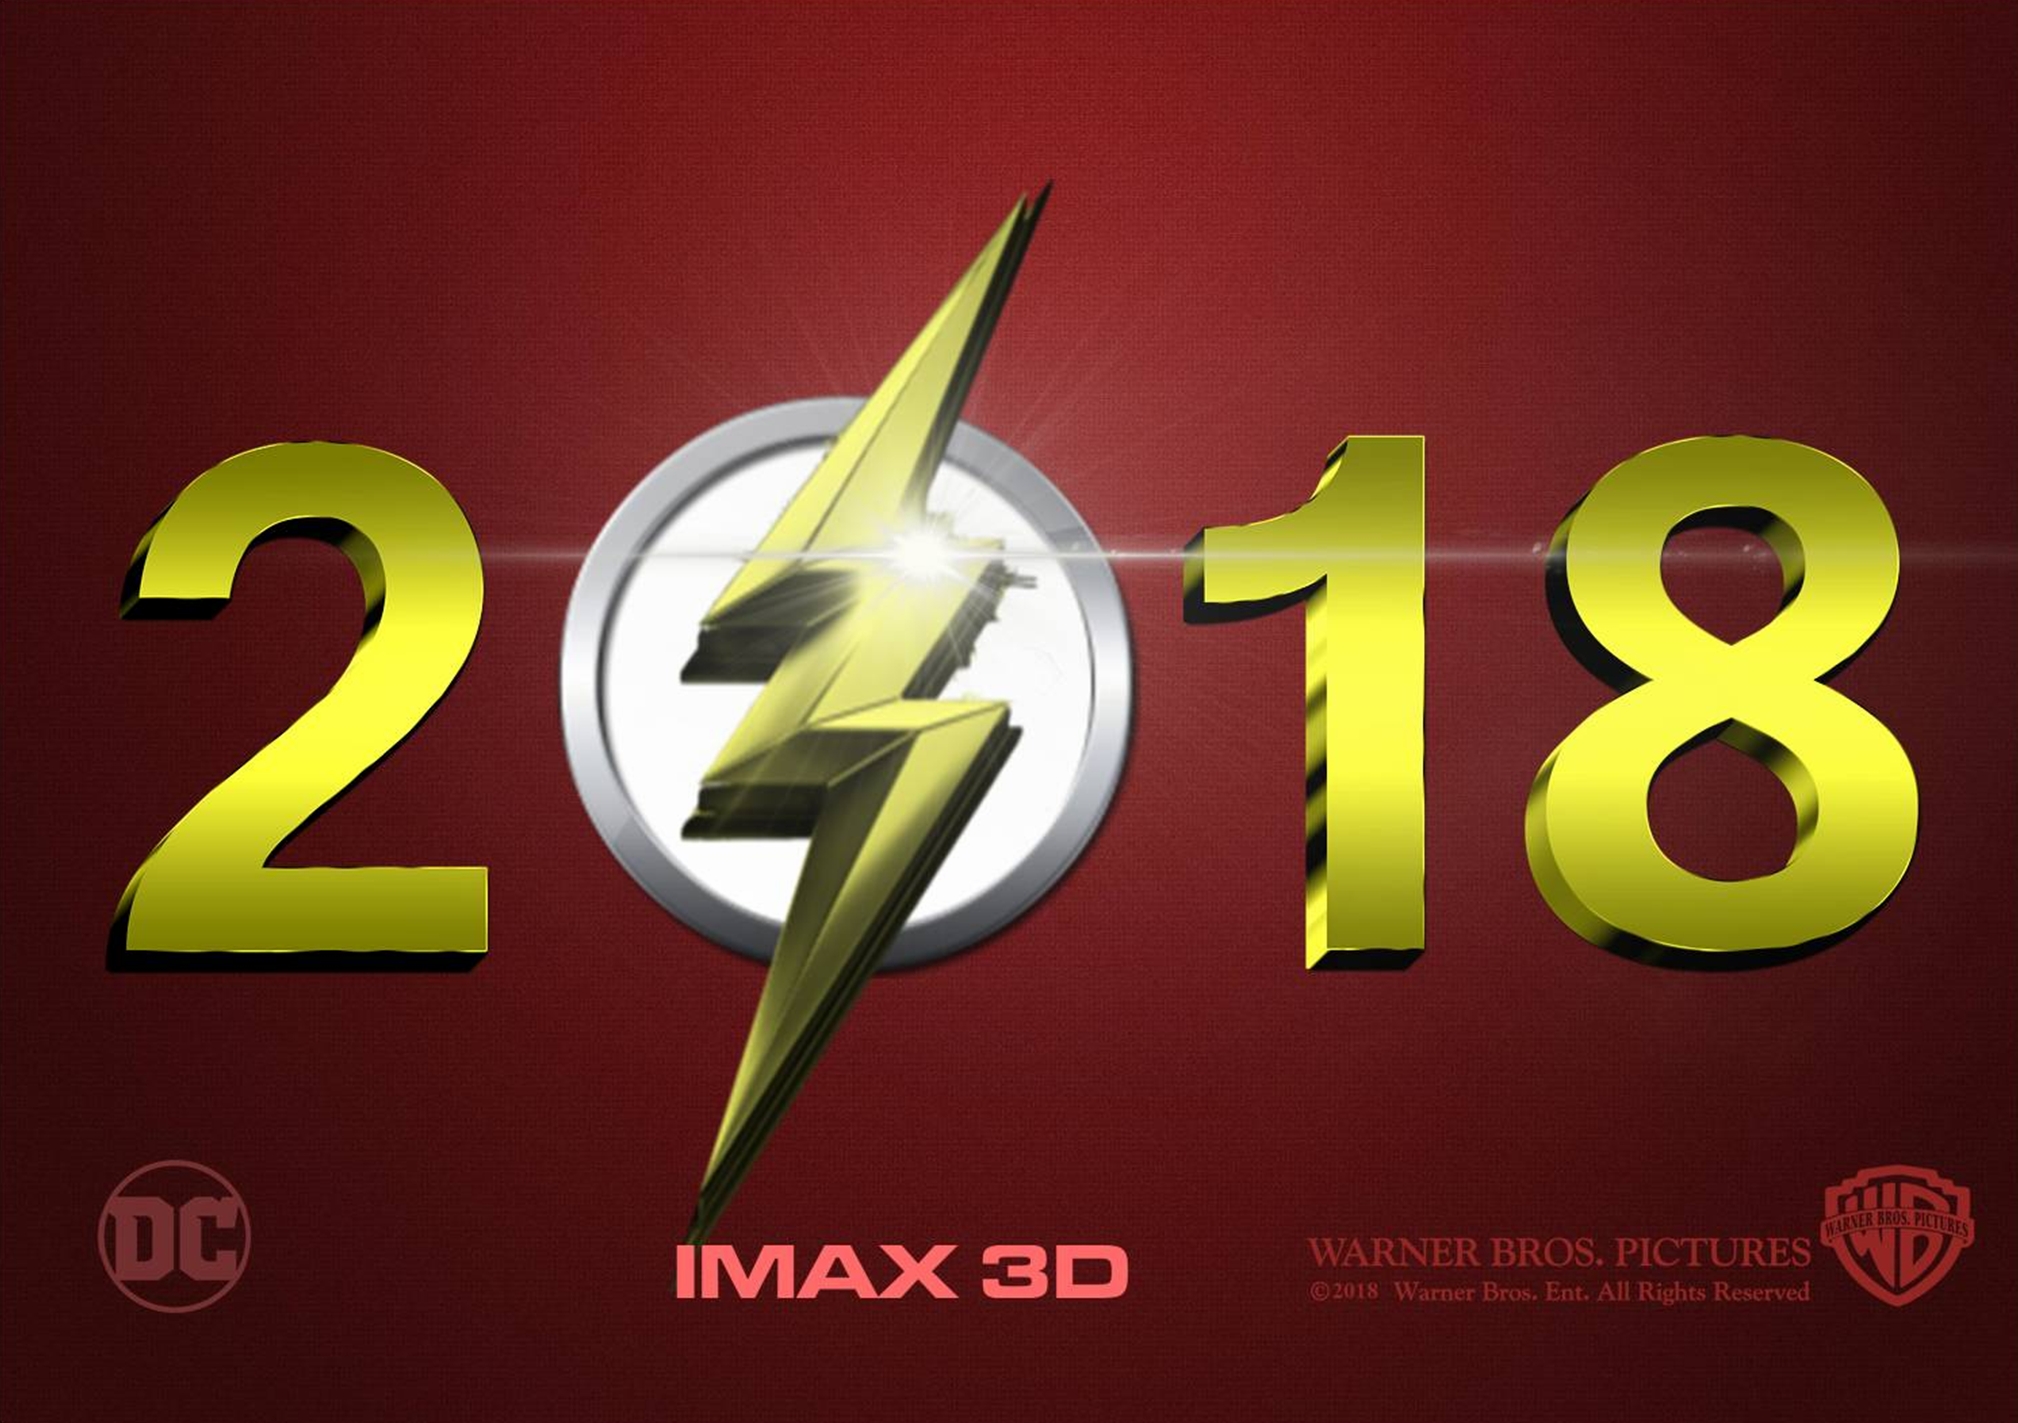 The Flash (2018) Backgrounds, Compatible - PC, Mobile, Gadgets| 2018x1423 px